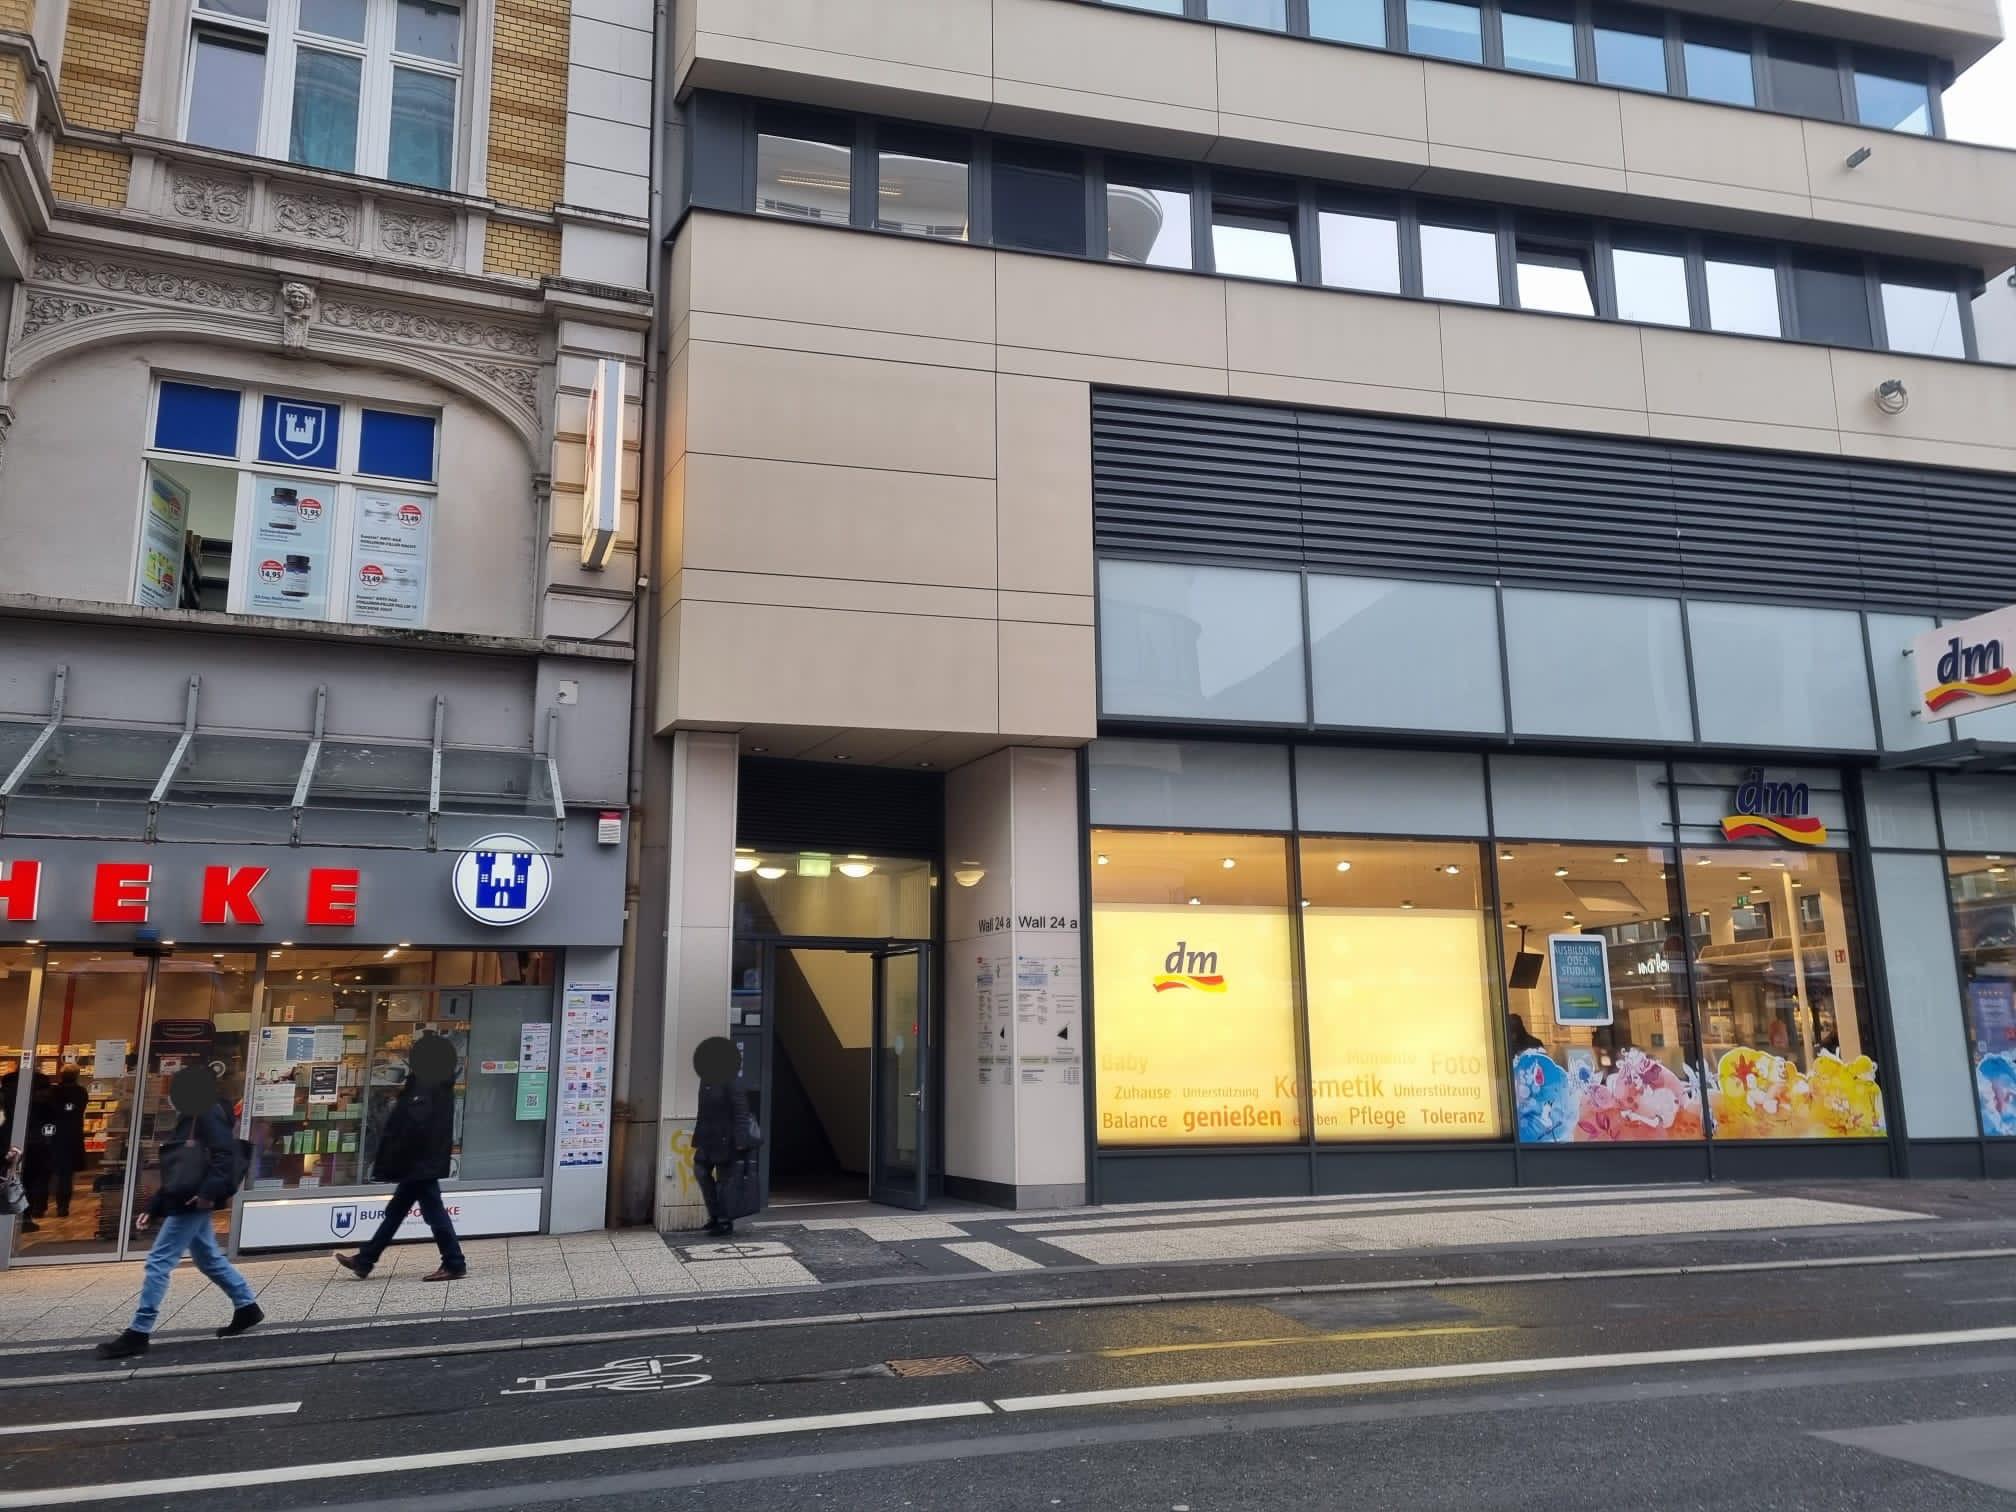 KIP Orthopädiehandel Sanitätshaus in Wuppertal Strassenansicht